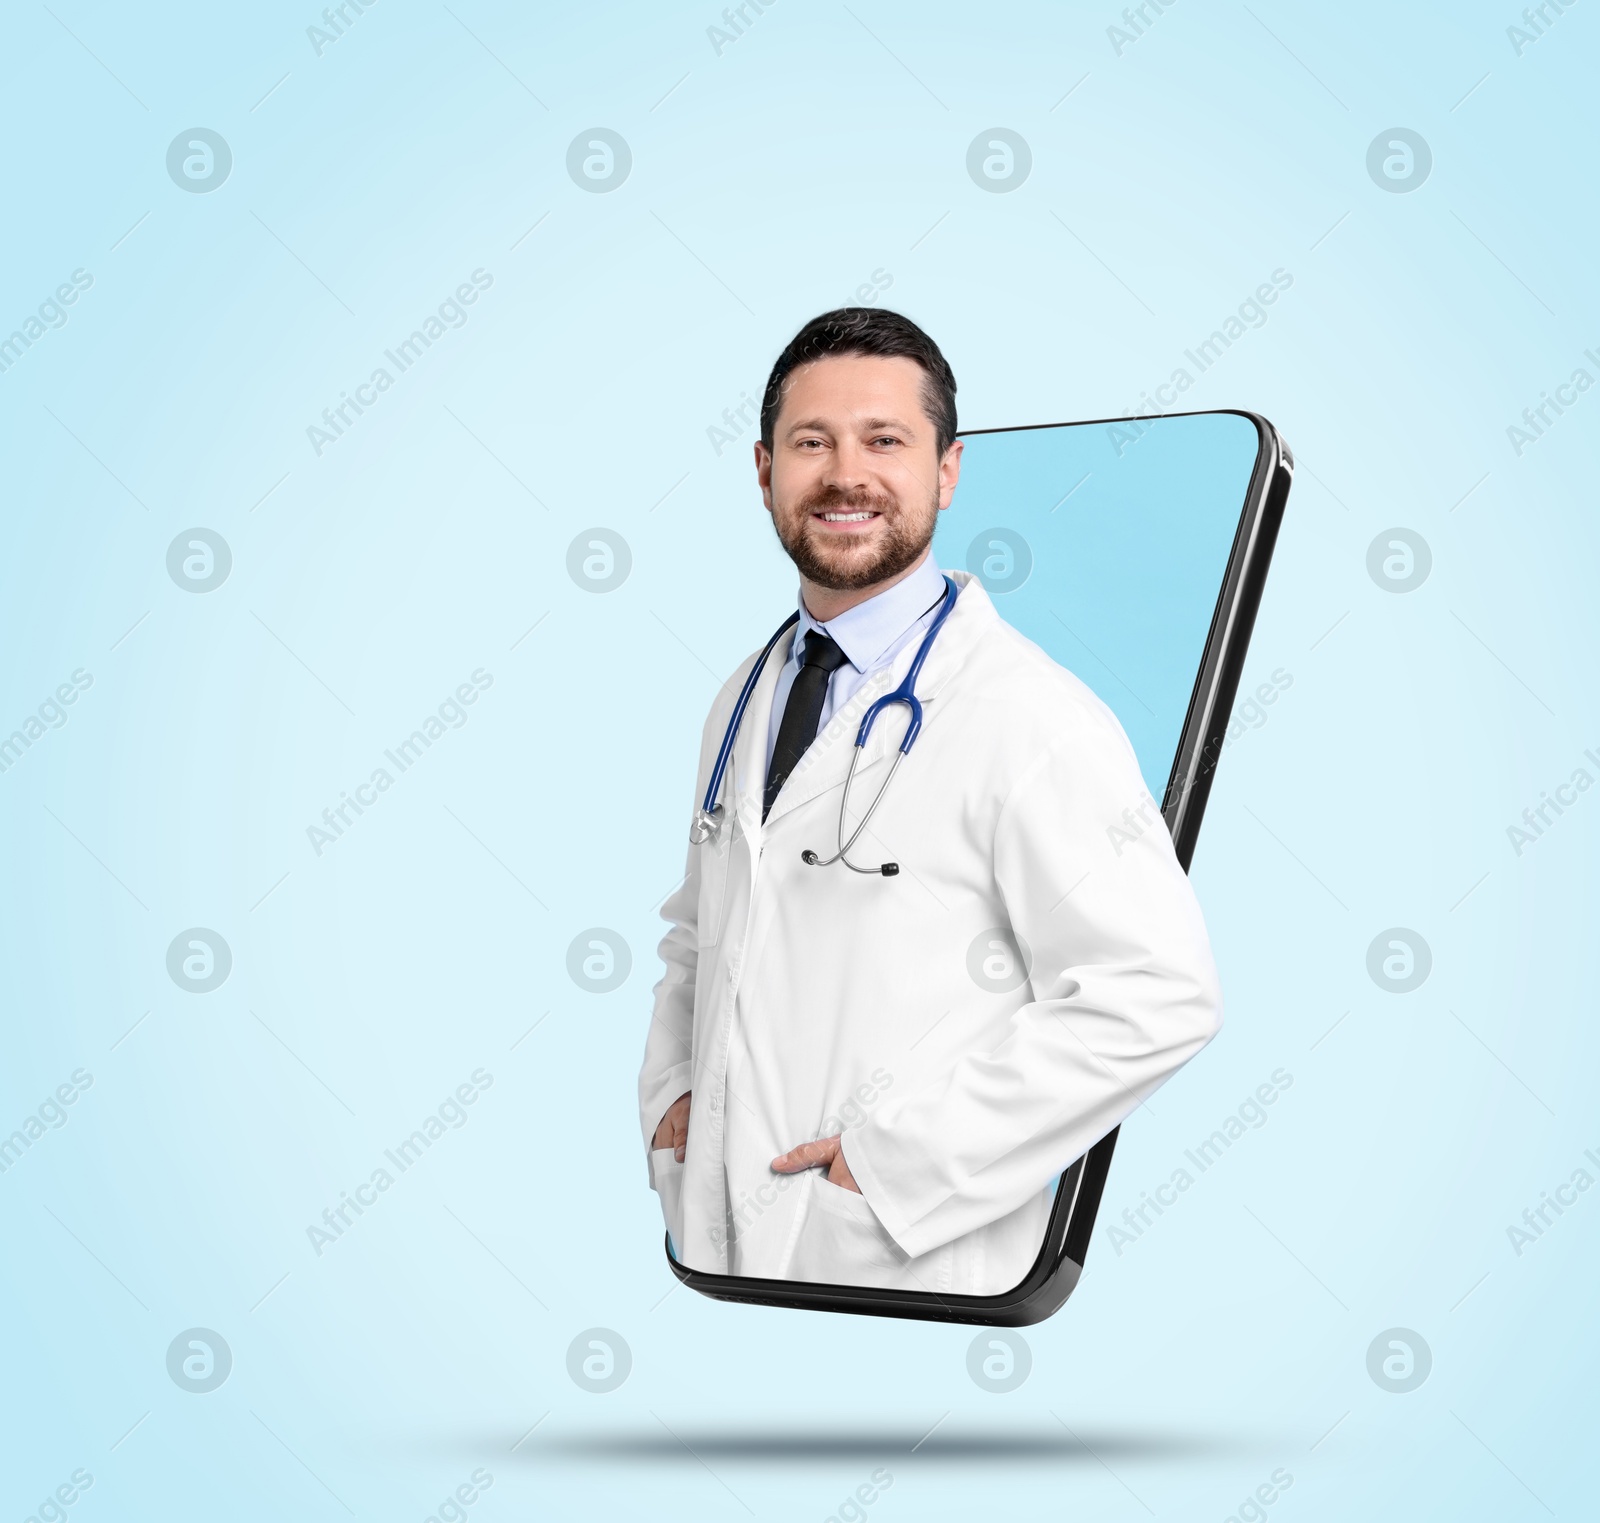 Image of Online medical consultation. Doctor on smartphone screen against light blue background